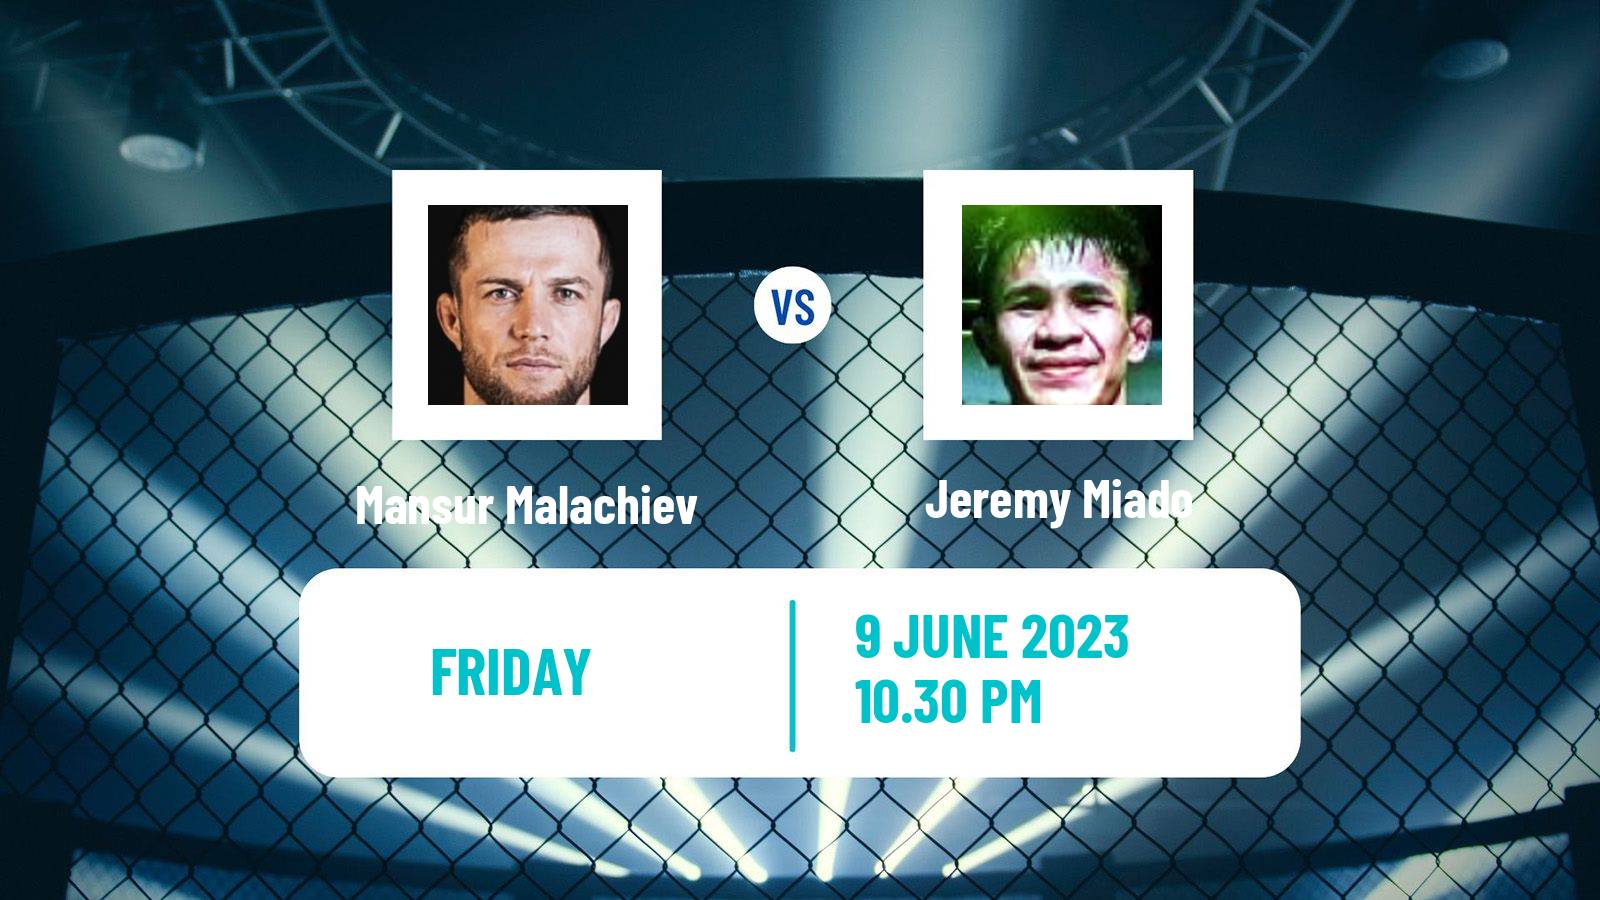 MMA Strawweight One Championship Men Mansur Malachiev - Jeremy Miado